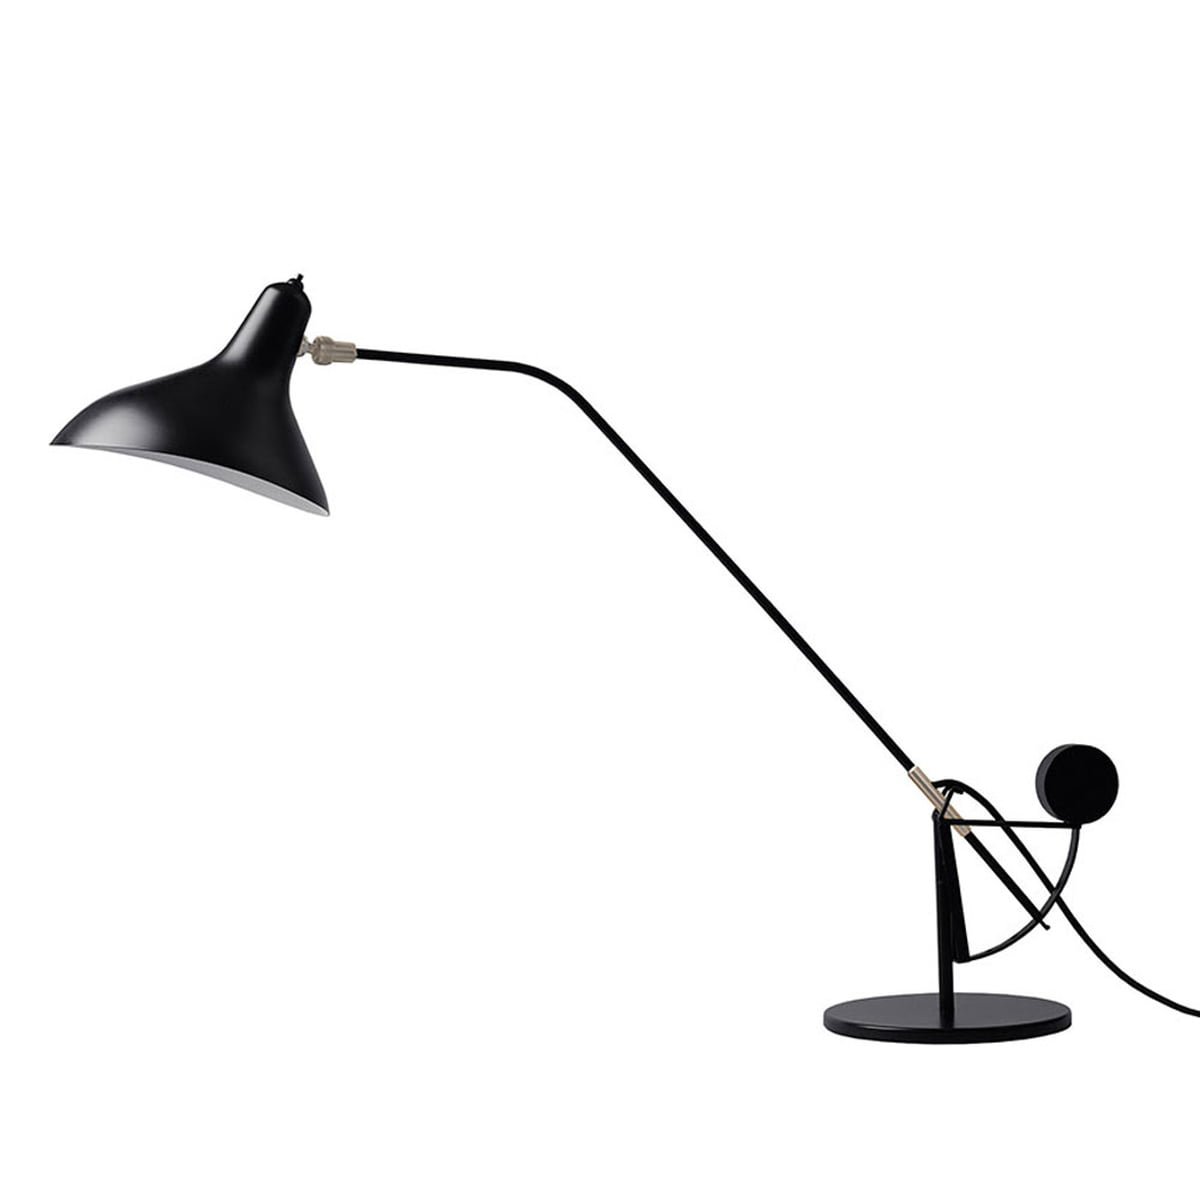 MANTIS BS3 table lamp